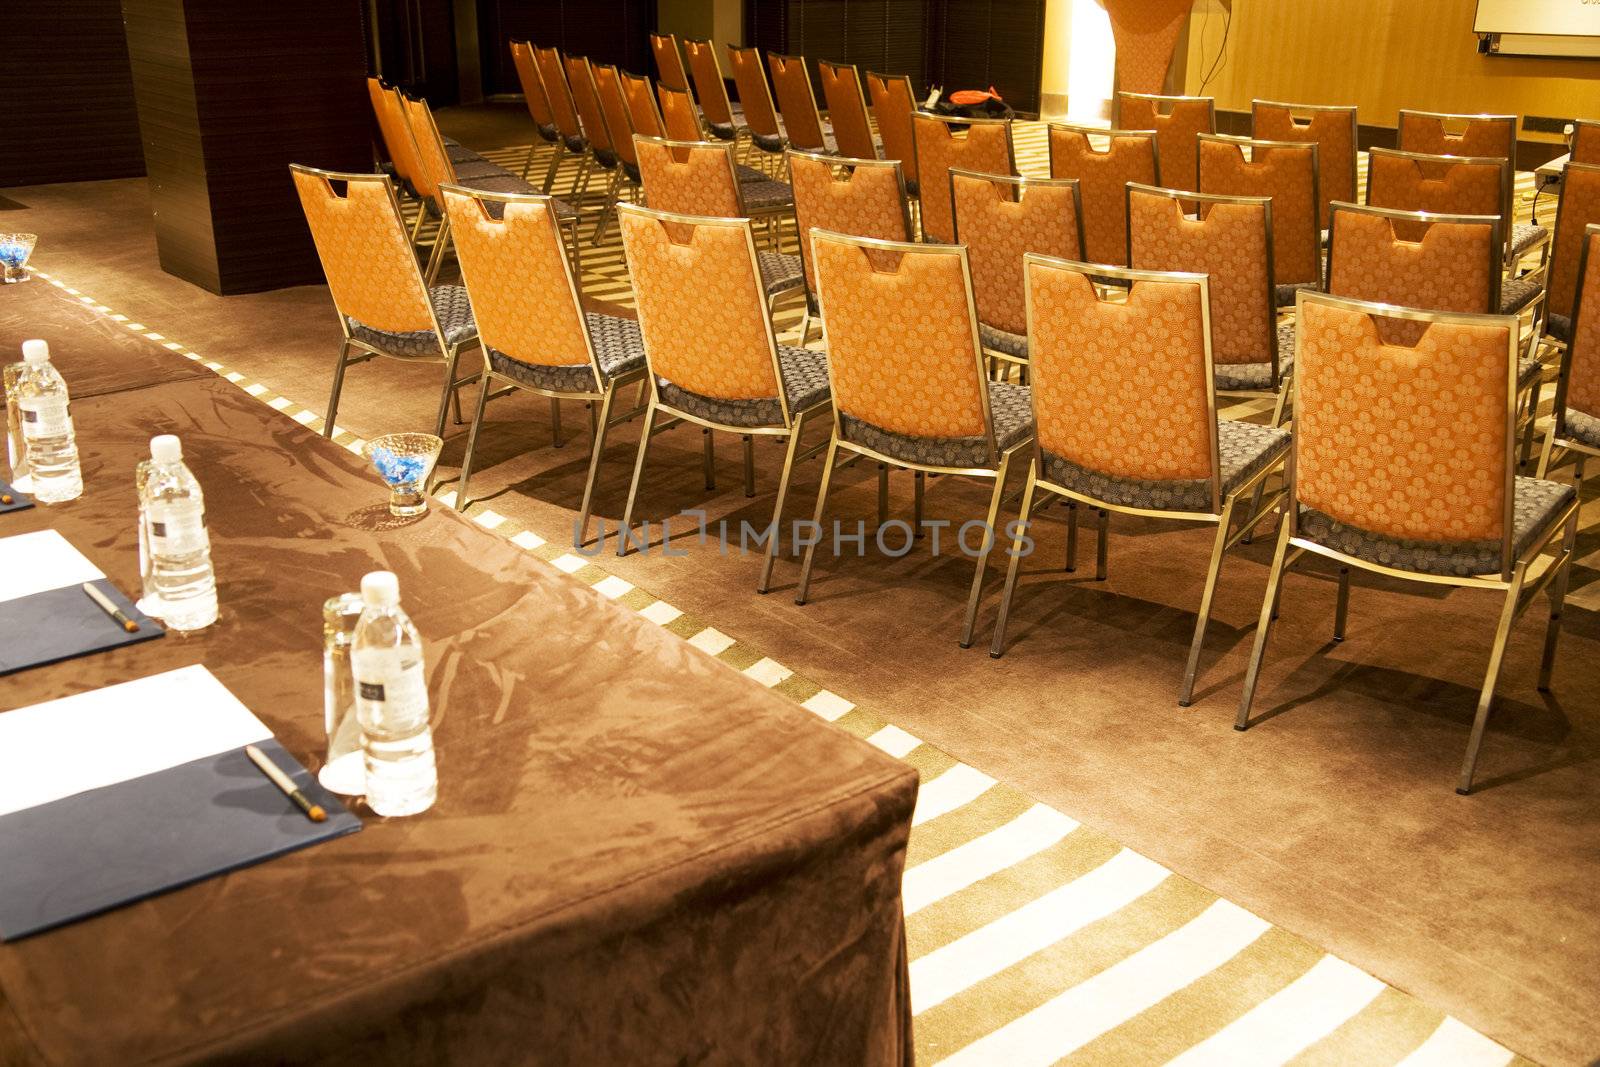 Image of a modern seminar room.
